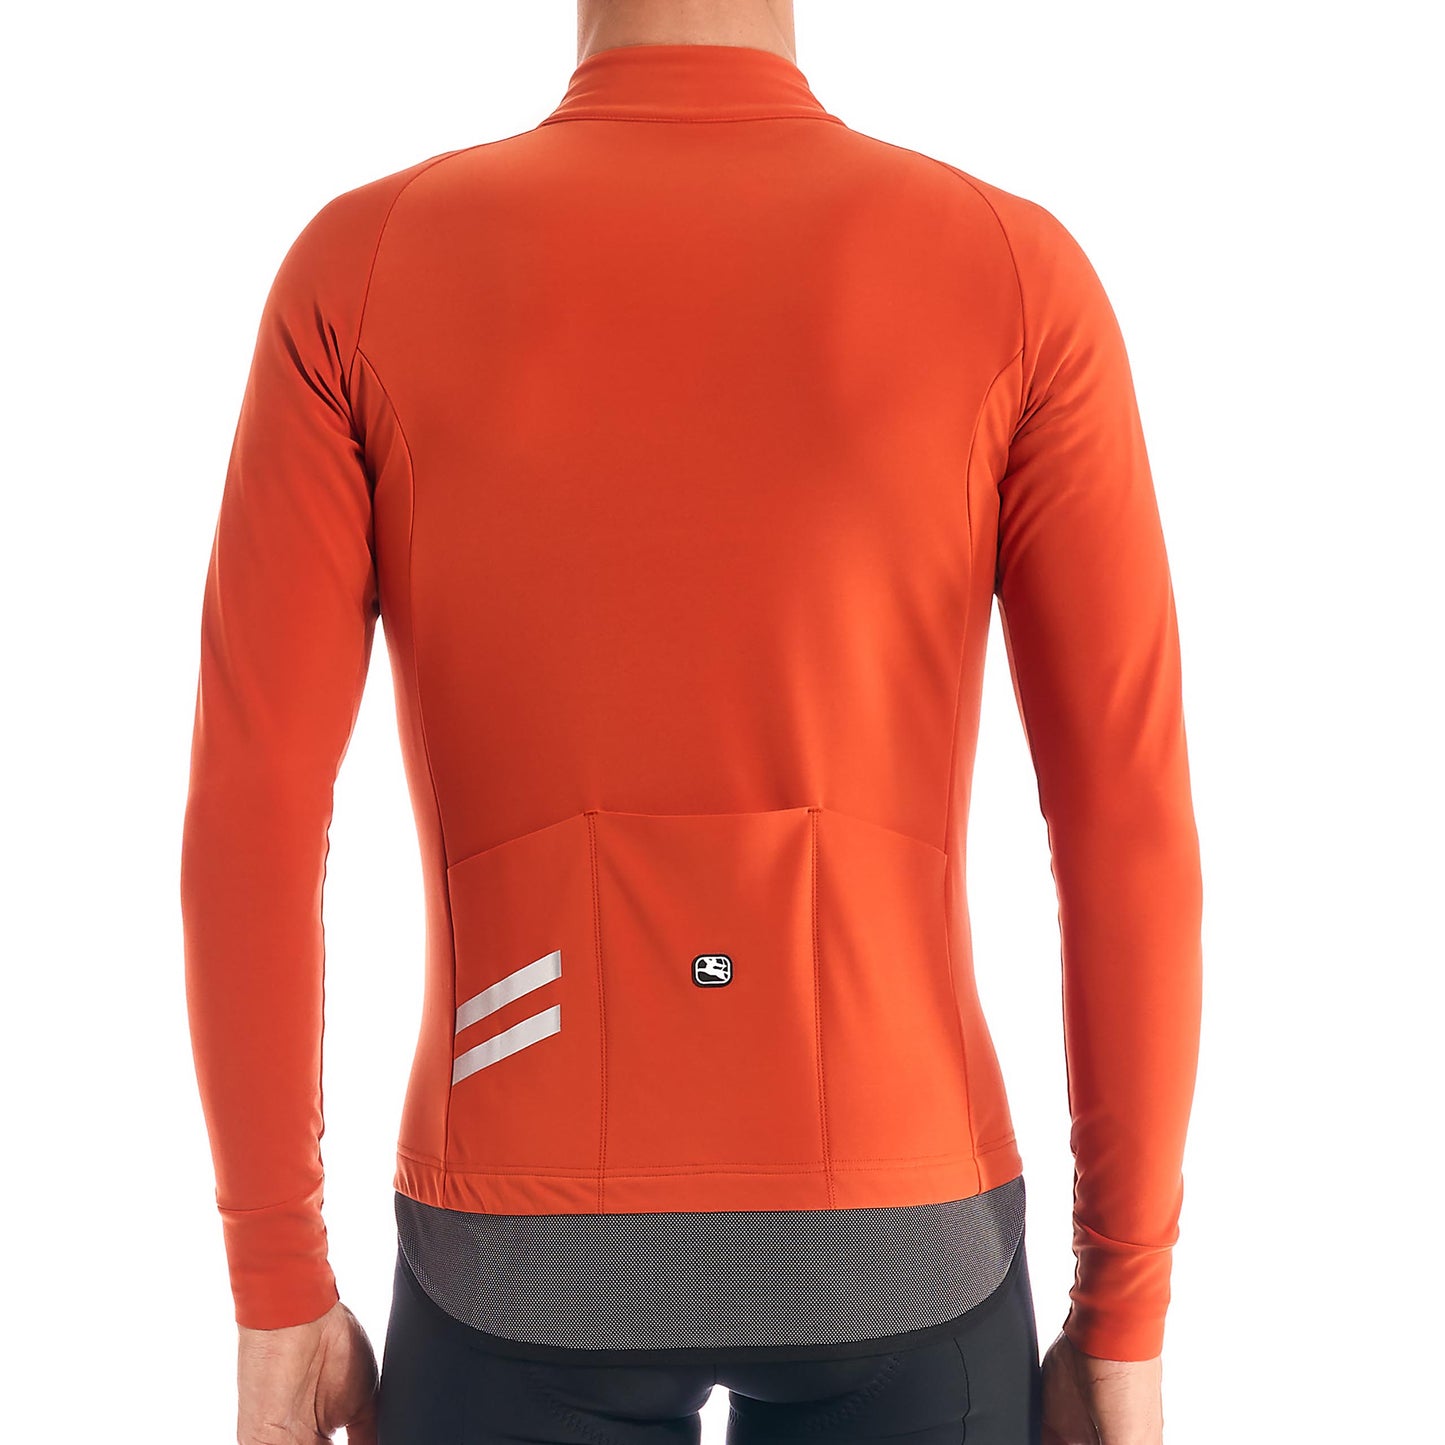 Men's G-Shield Thermal Long Sleeve Jersey sienna-orange